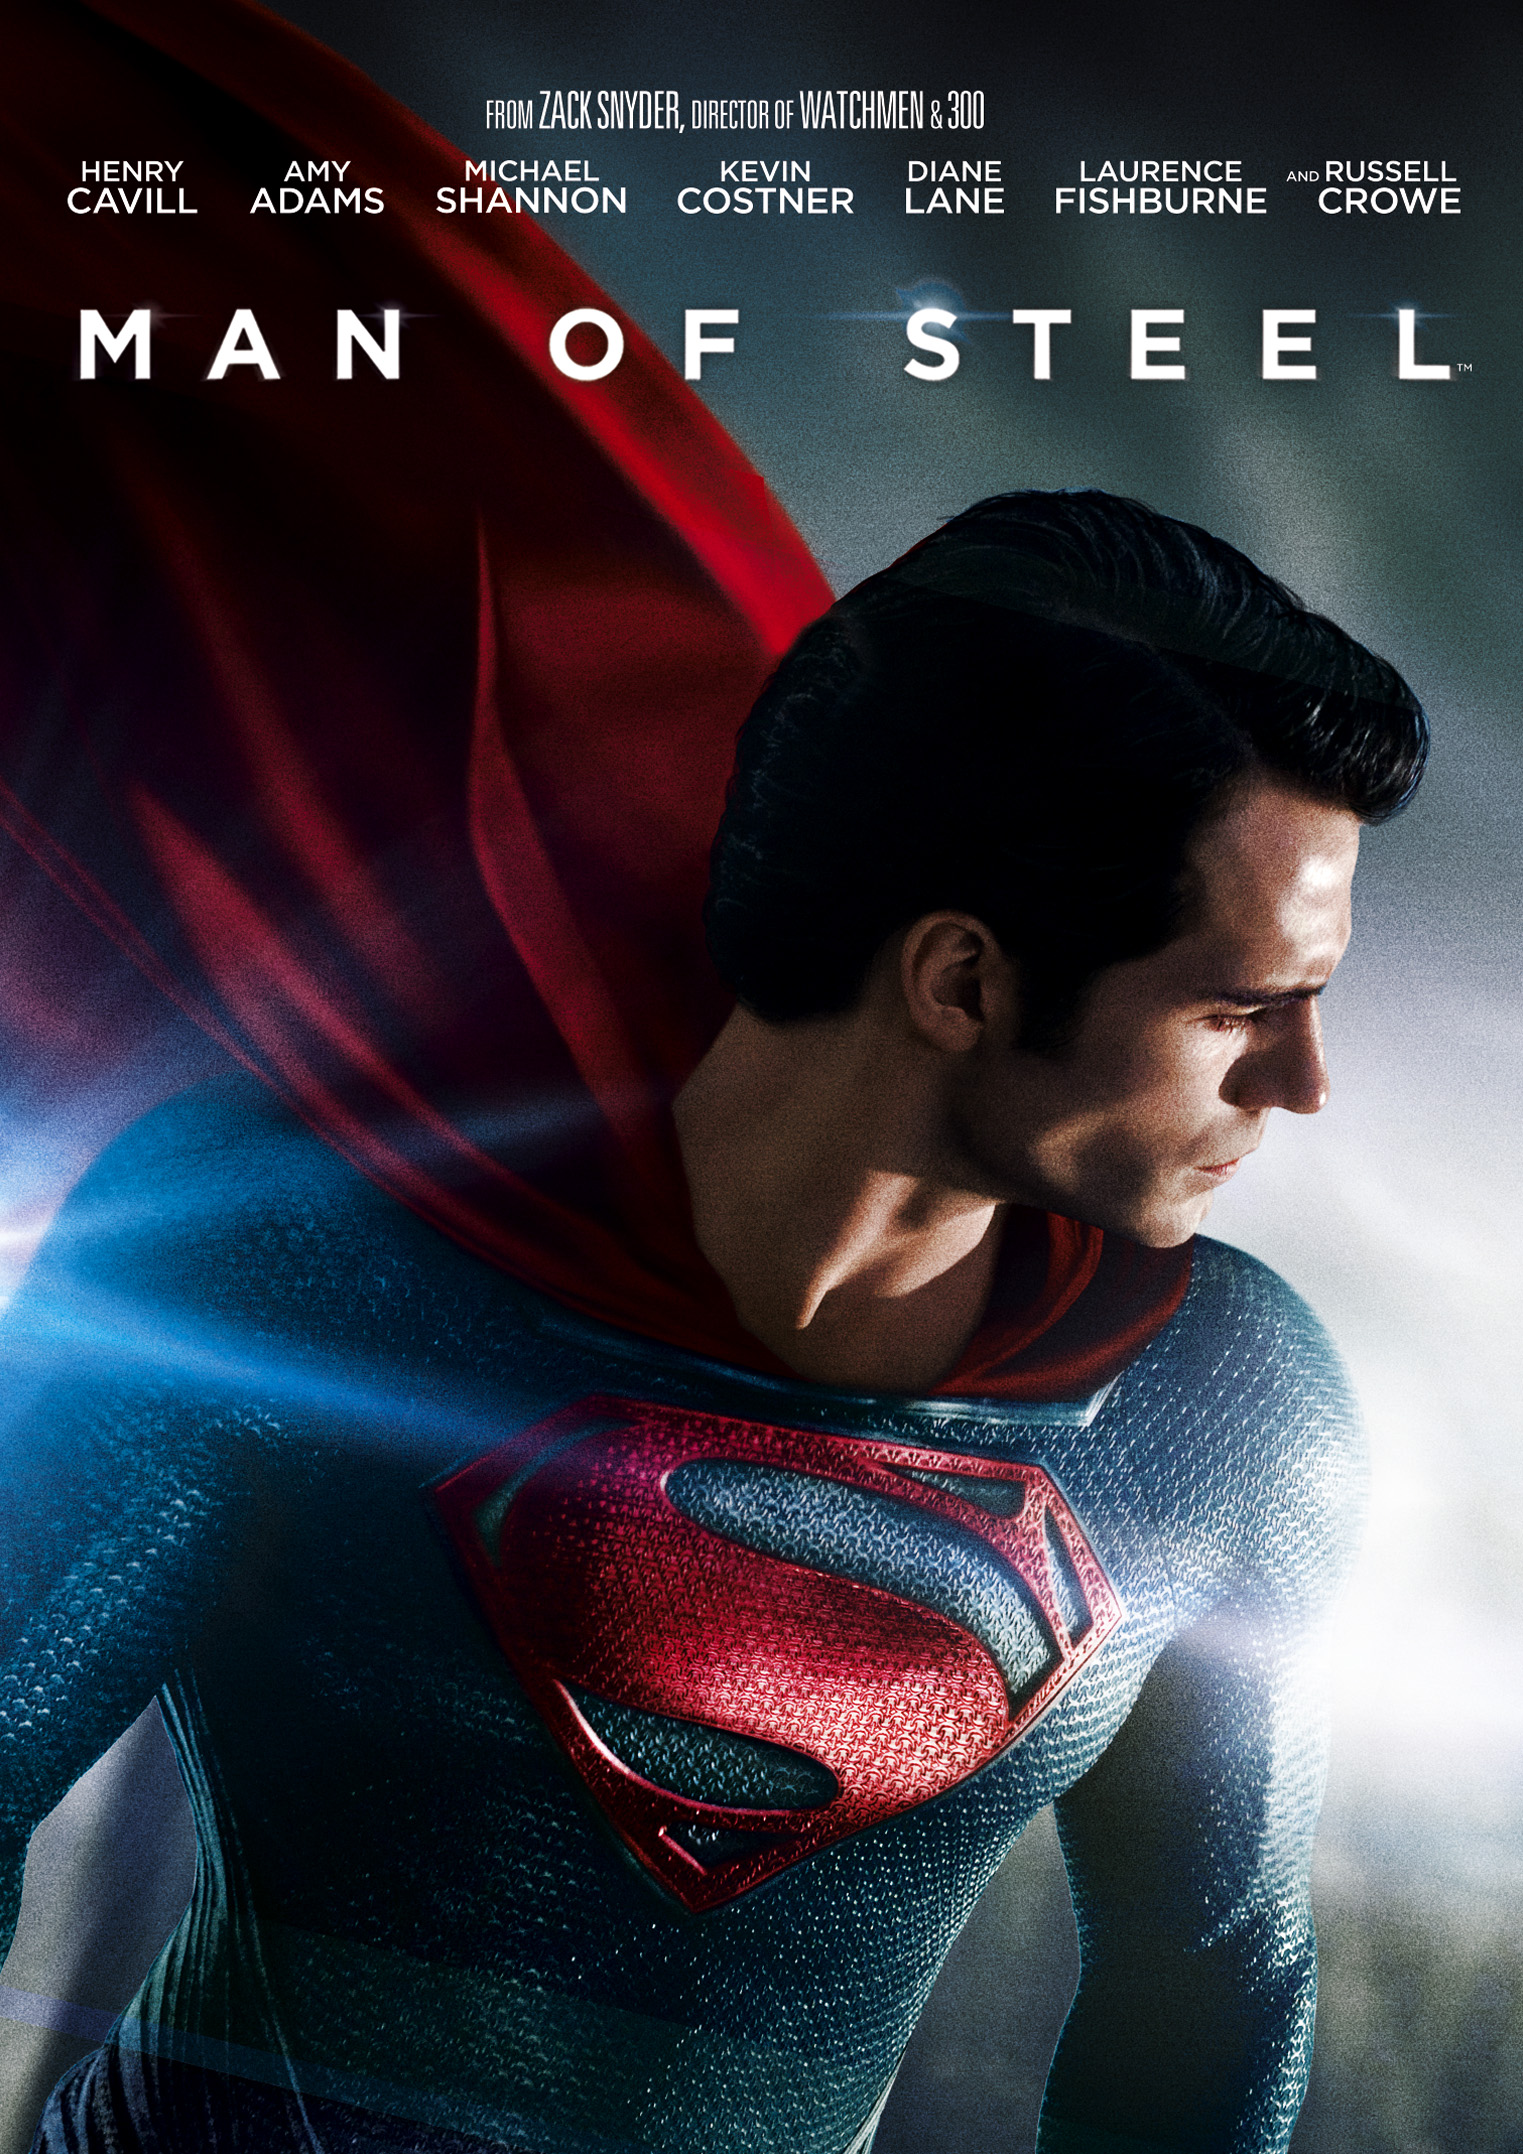 Superman Man of Steel Review! -SPOILERS